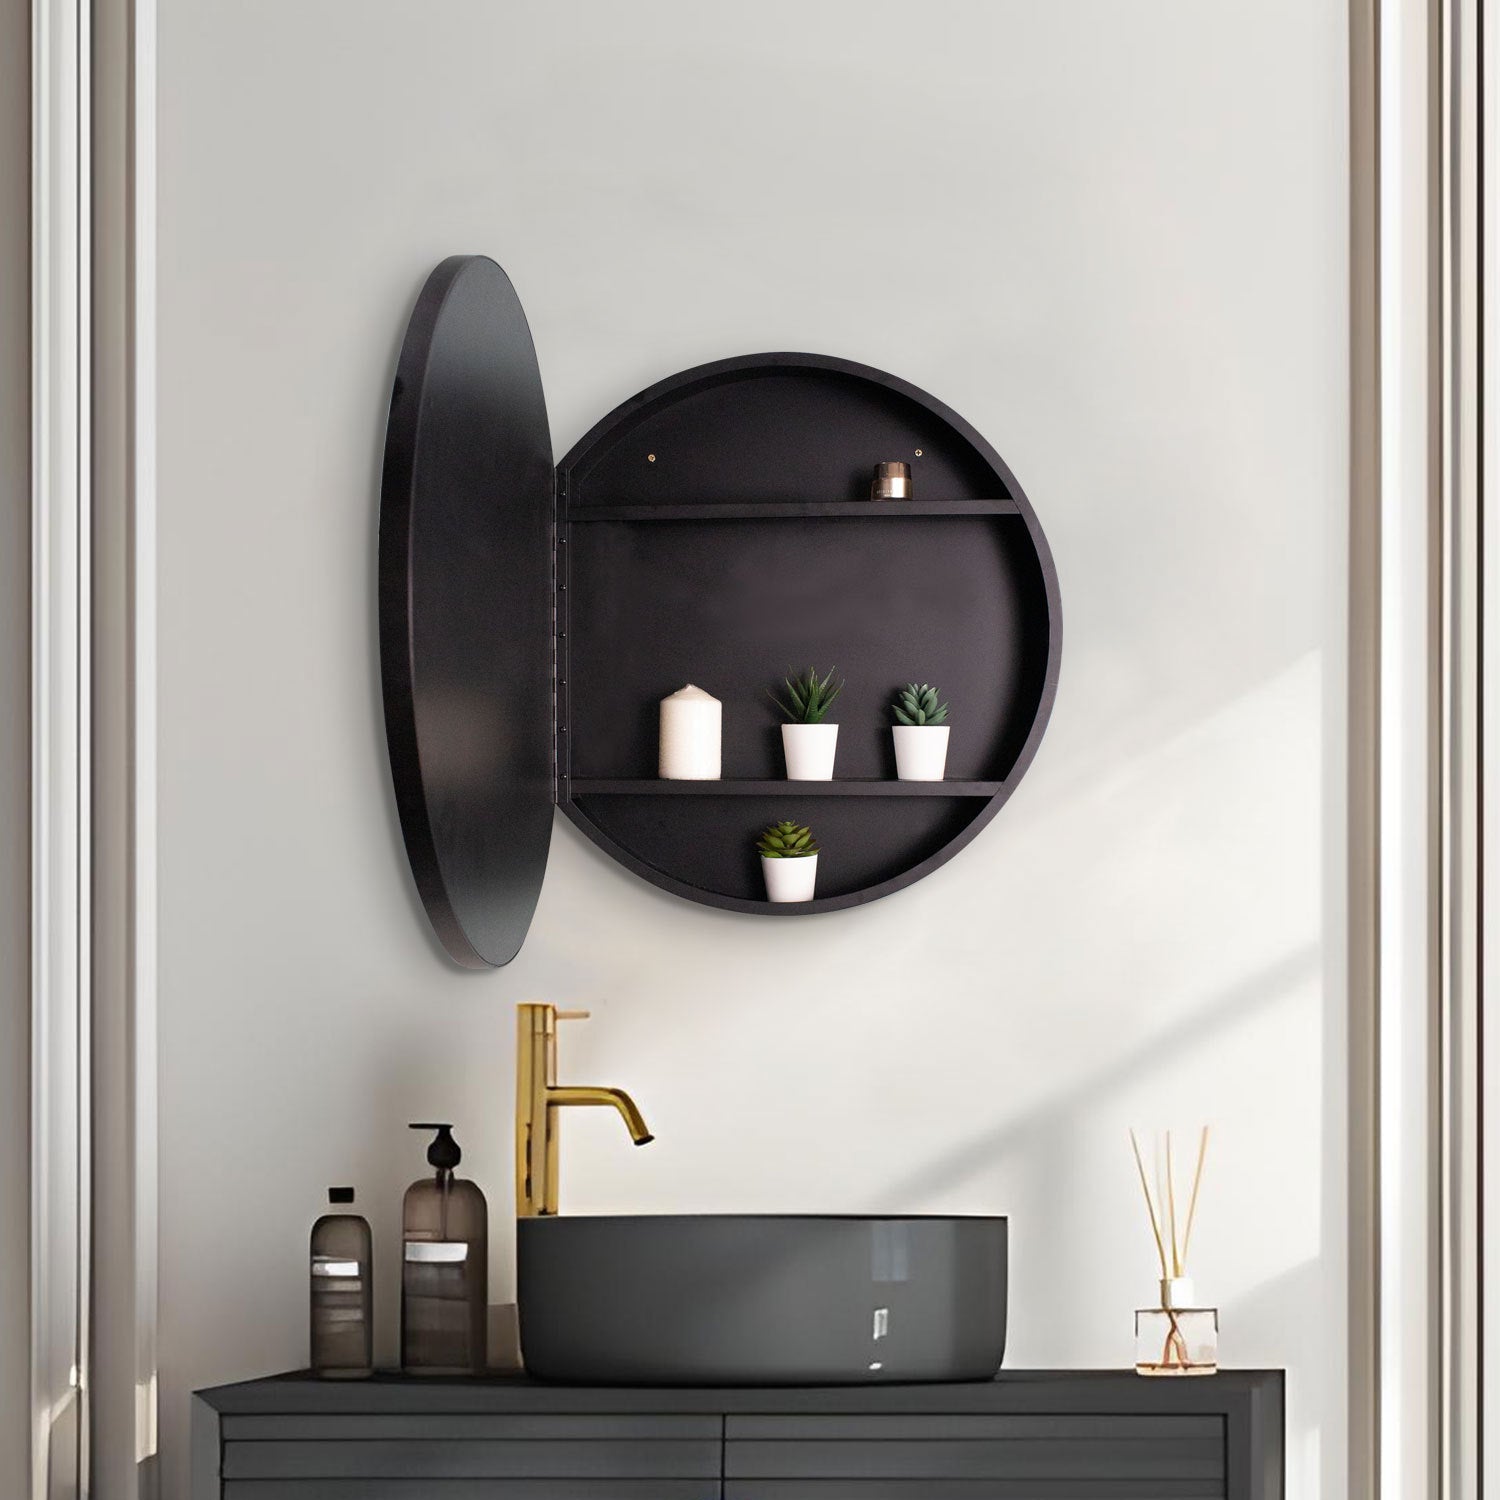 24x24 inch Black Metal Framed Wall mount  Bathroom Medicine Cabinet with Mirror